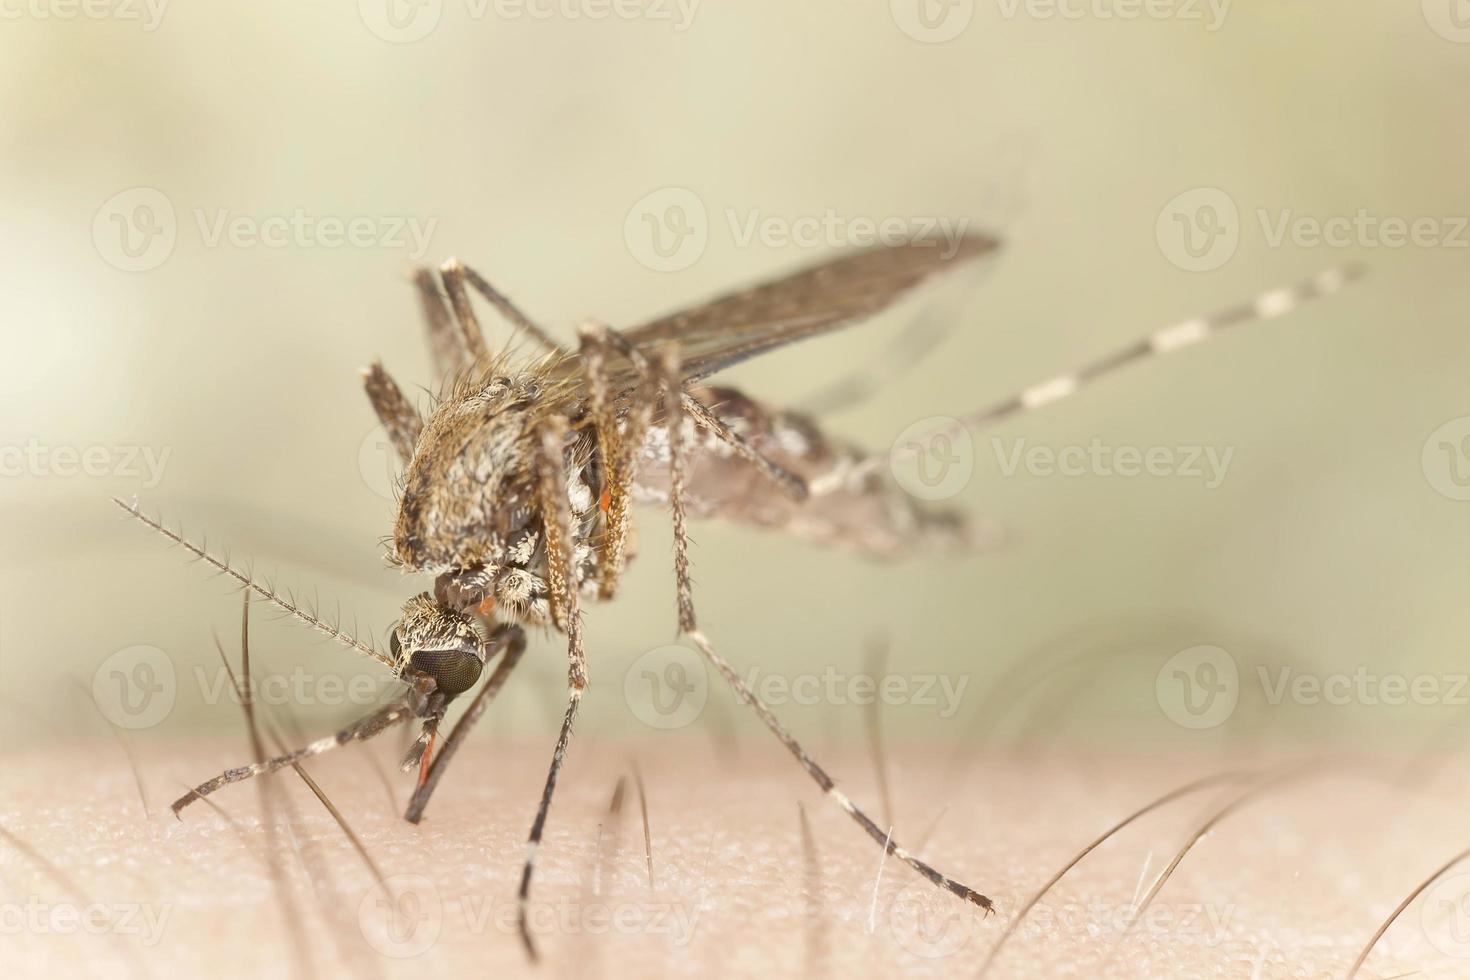 Mosquito sucking blood from human, macro photo